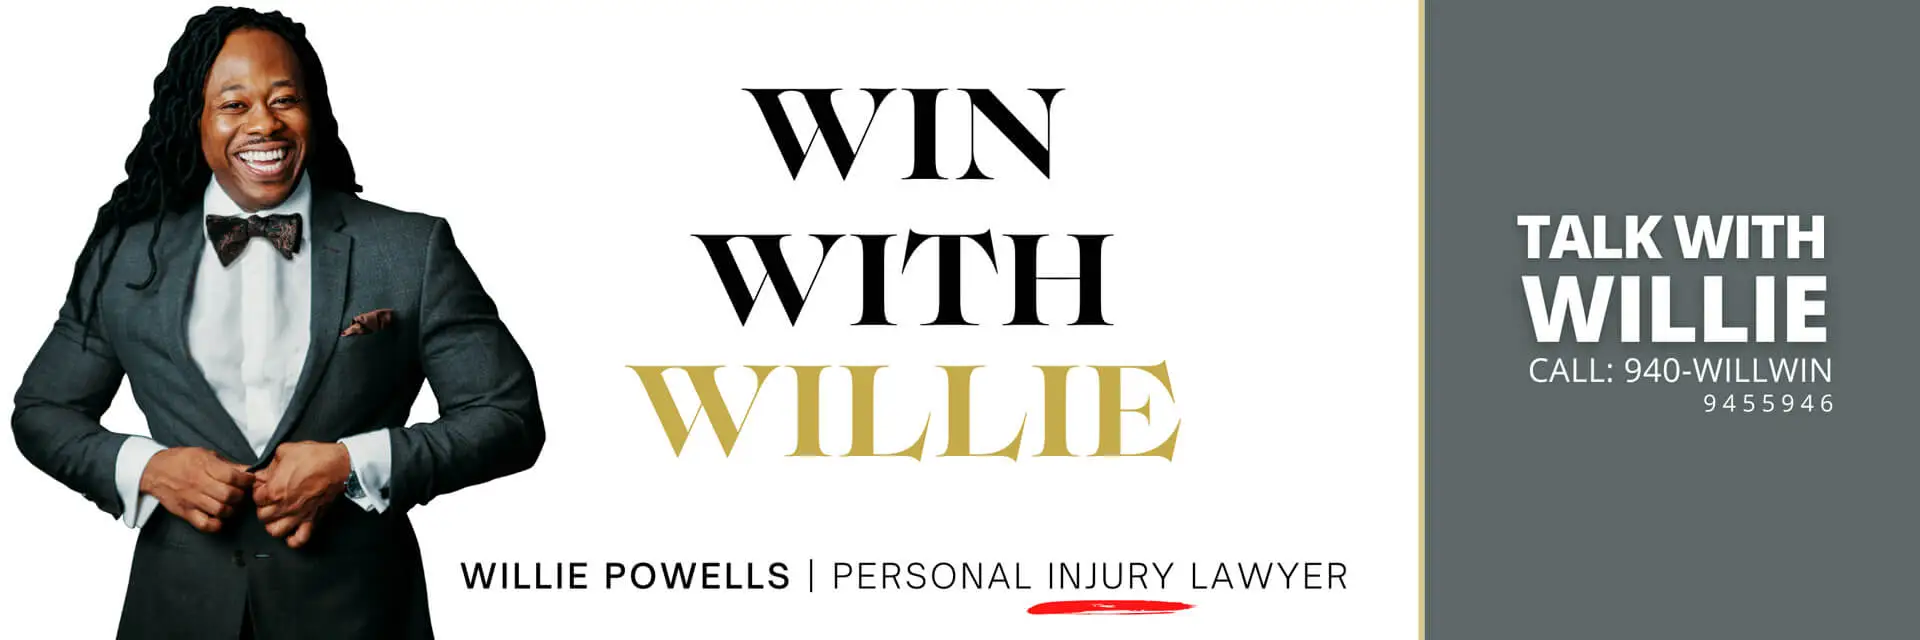 Willie Powells III Billboard